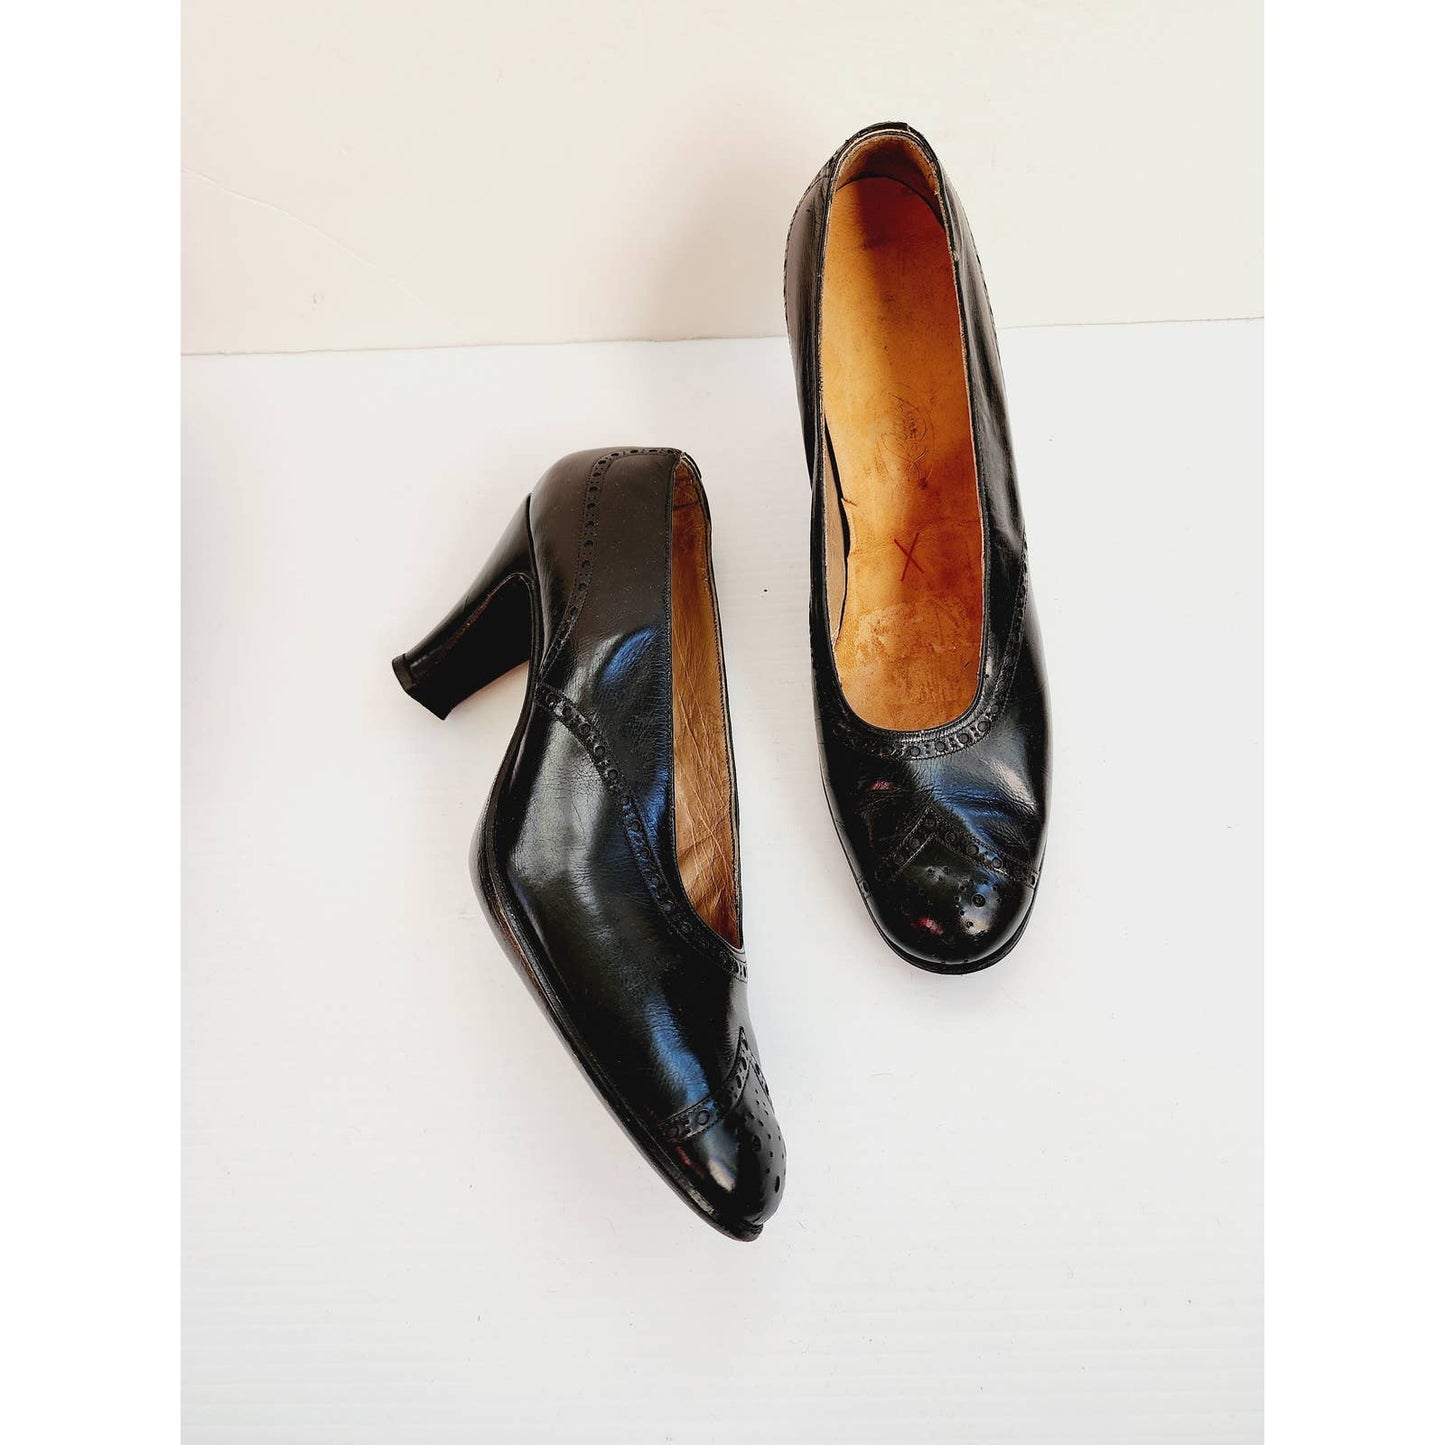 Vintage 30s Shoes Black Leather Pumps Brogueing Letang Chicago Size 6